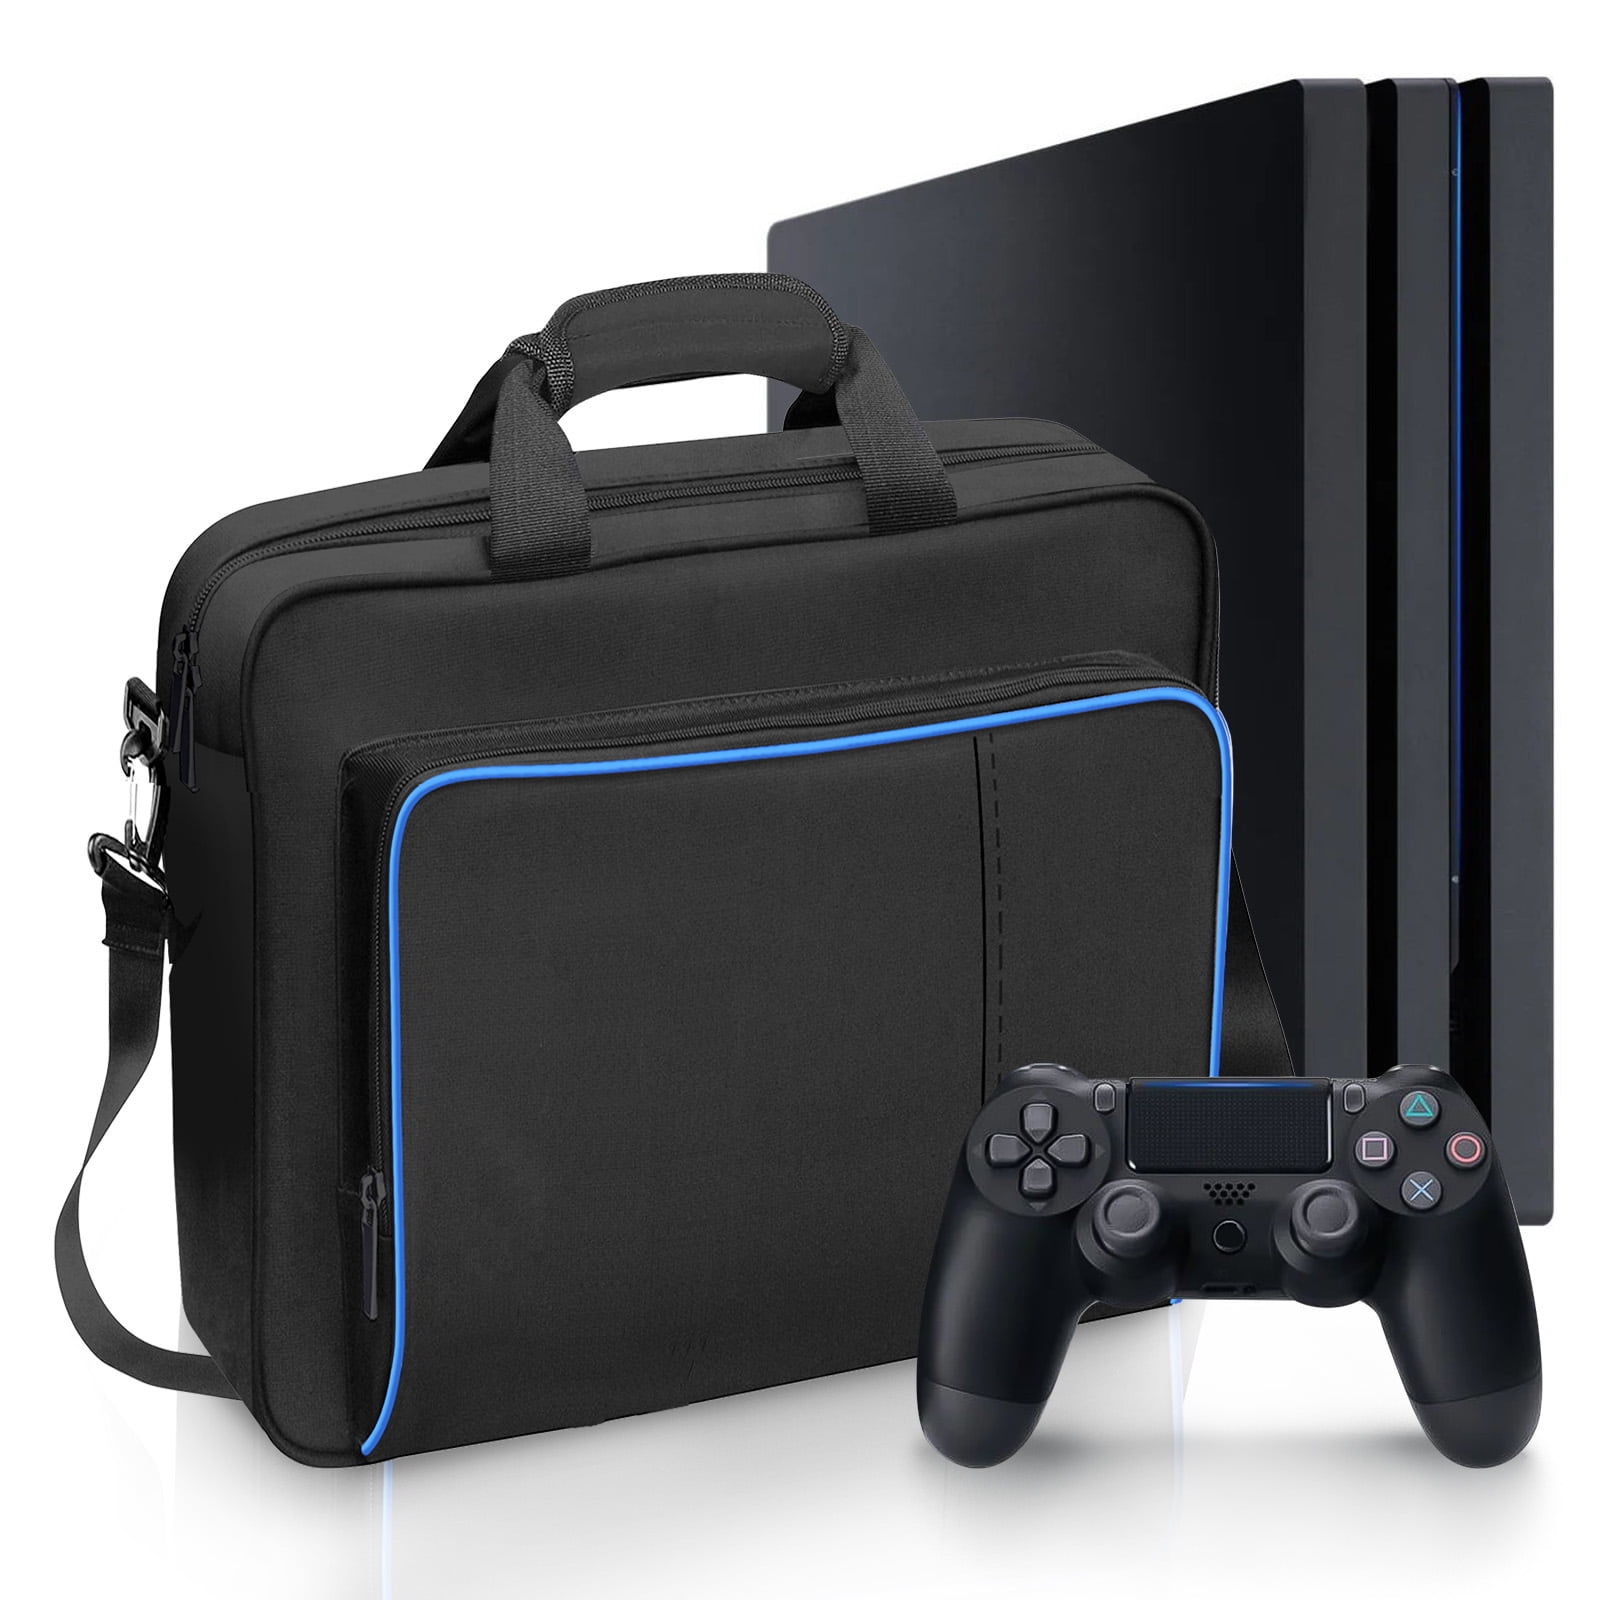 EEEkit Carrying Case Fit PS4 Console, Travel Case Handbag Shoulder Bag Fit for Sony PlayStation 4, Multifunctional Waterproof Carry Bag, Black - Walmart.com